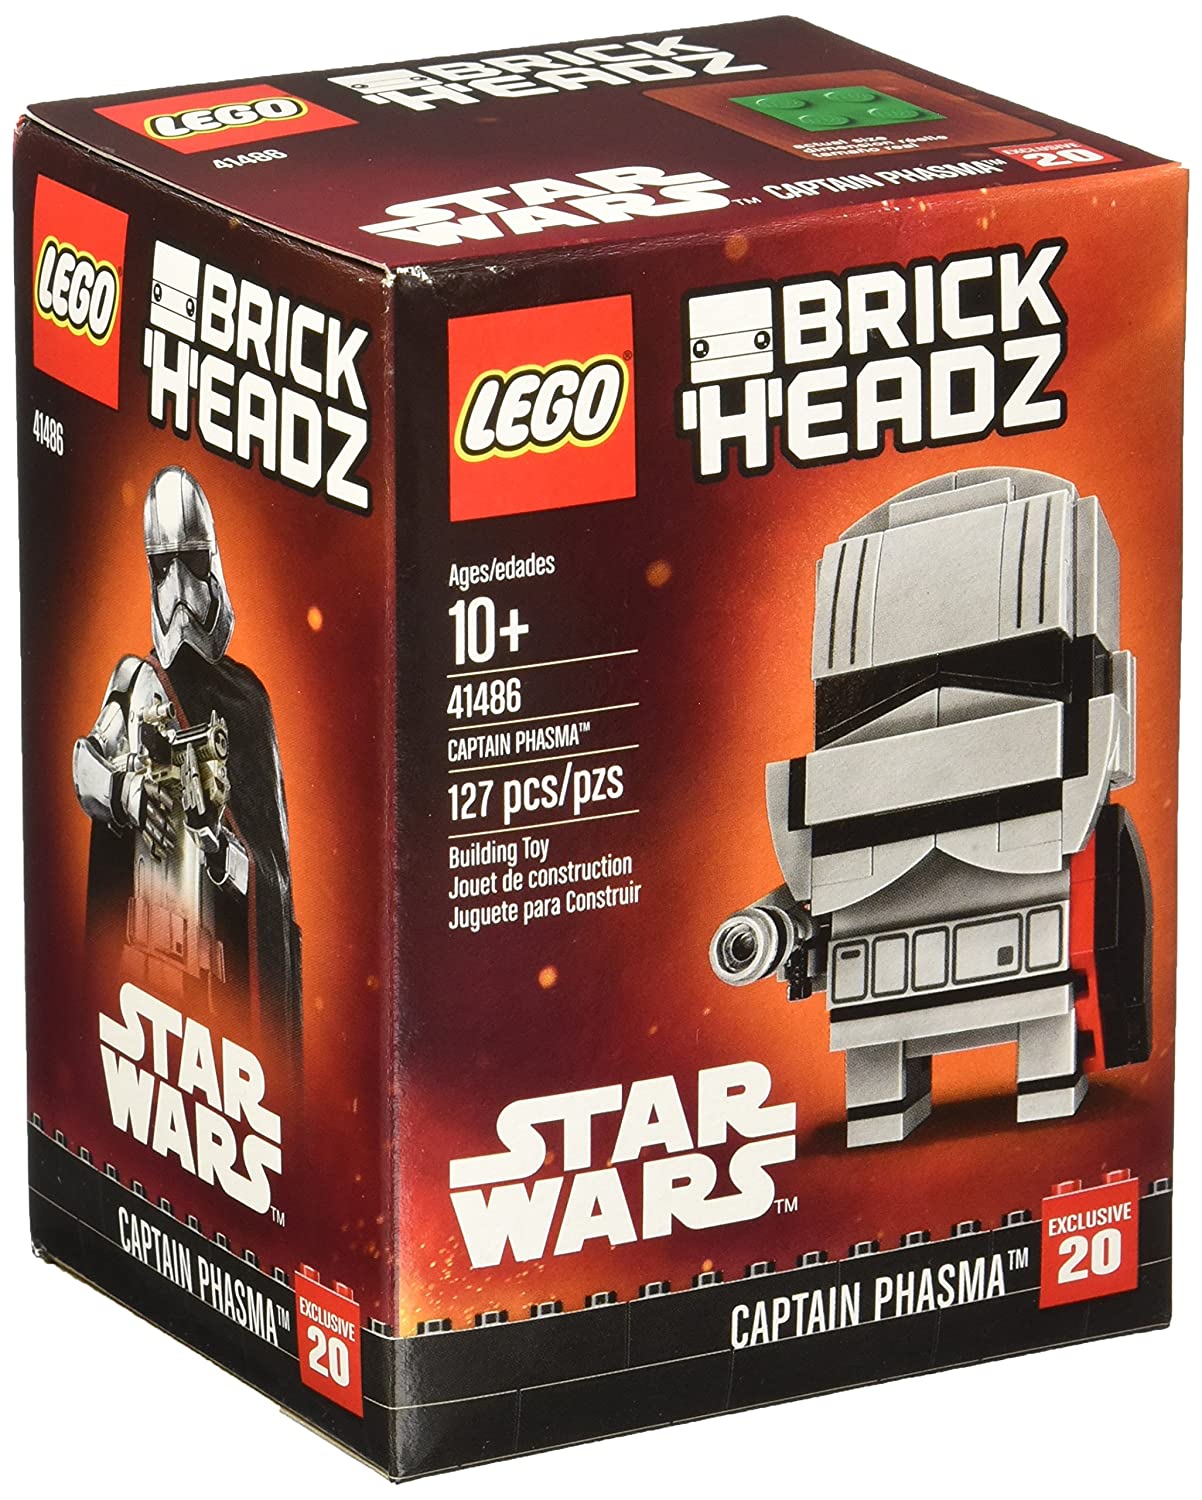 11 Best Lego Brickheadz 2022 - Buying Guide & Reviews 4